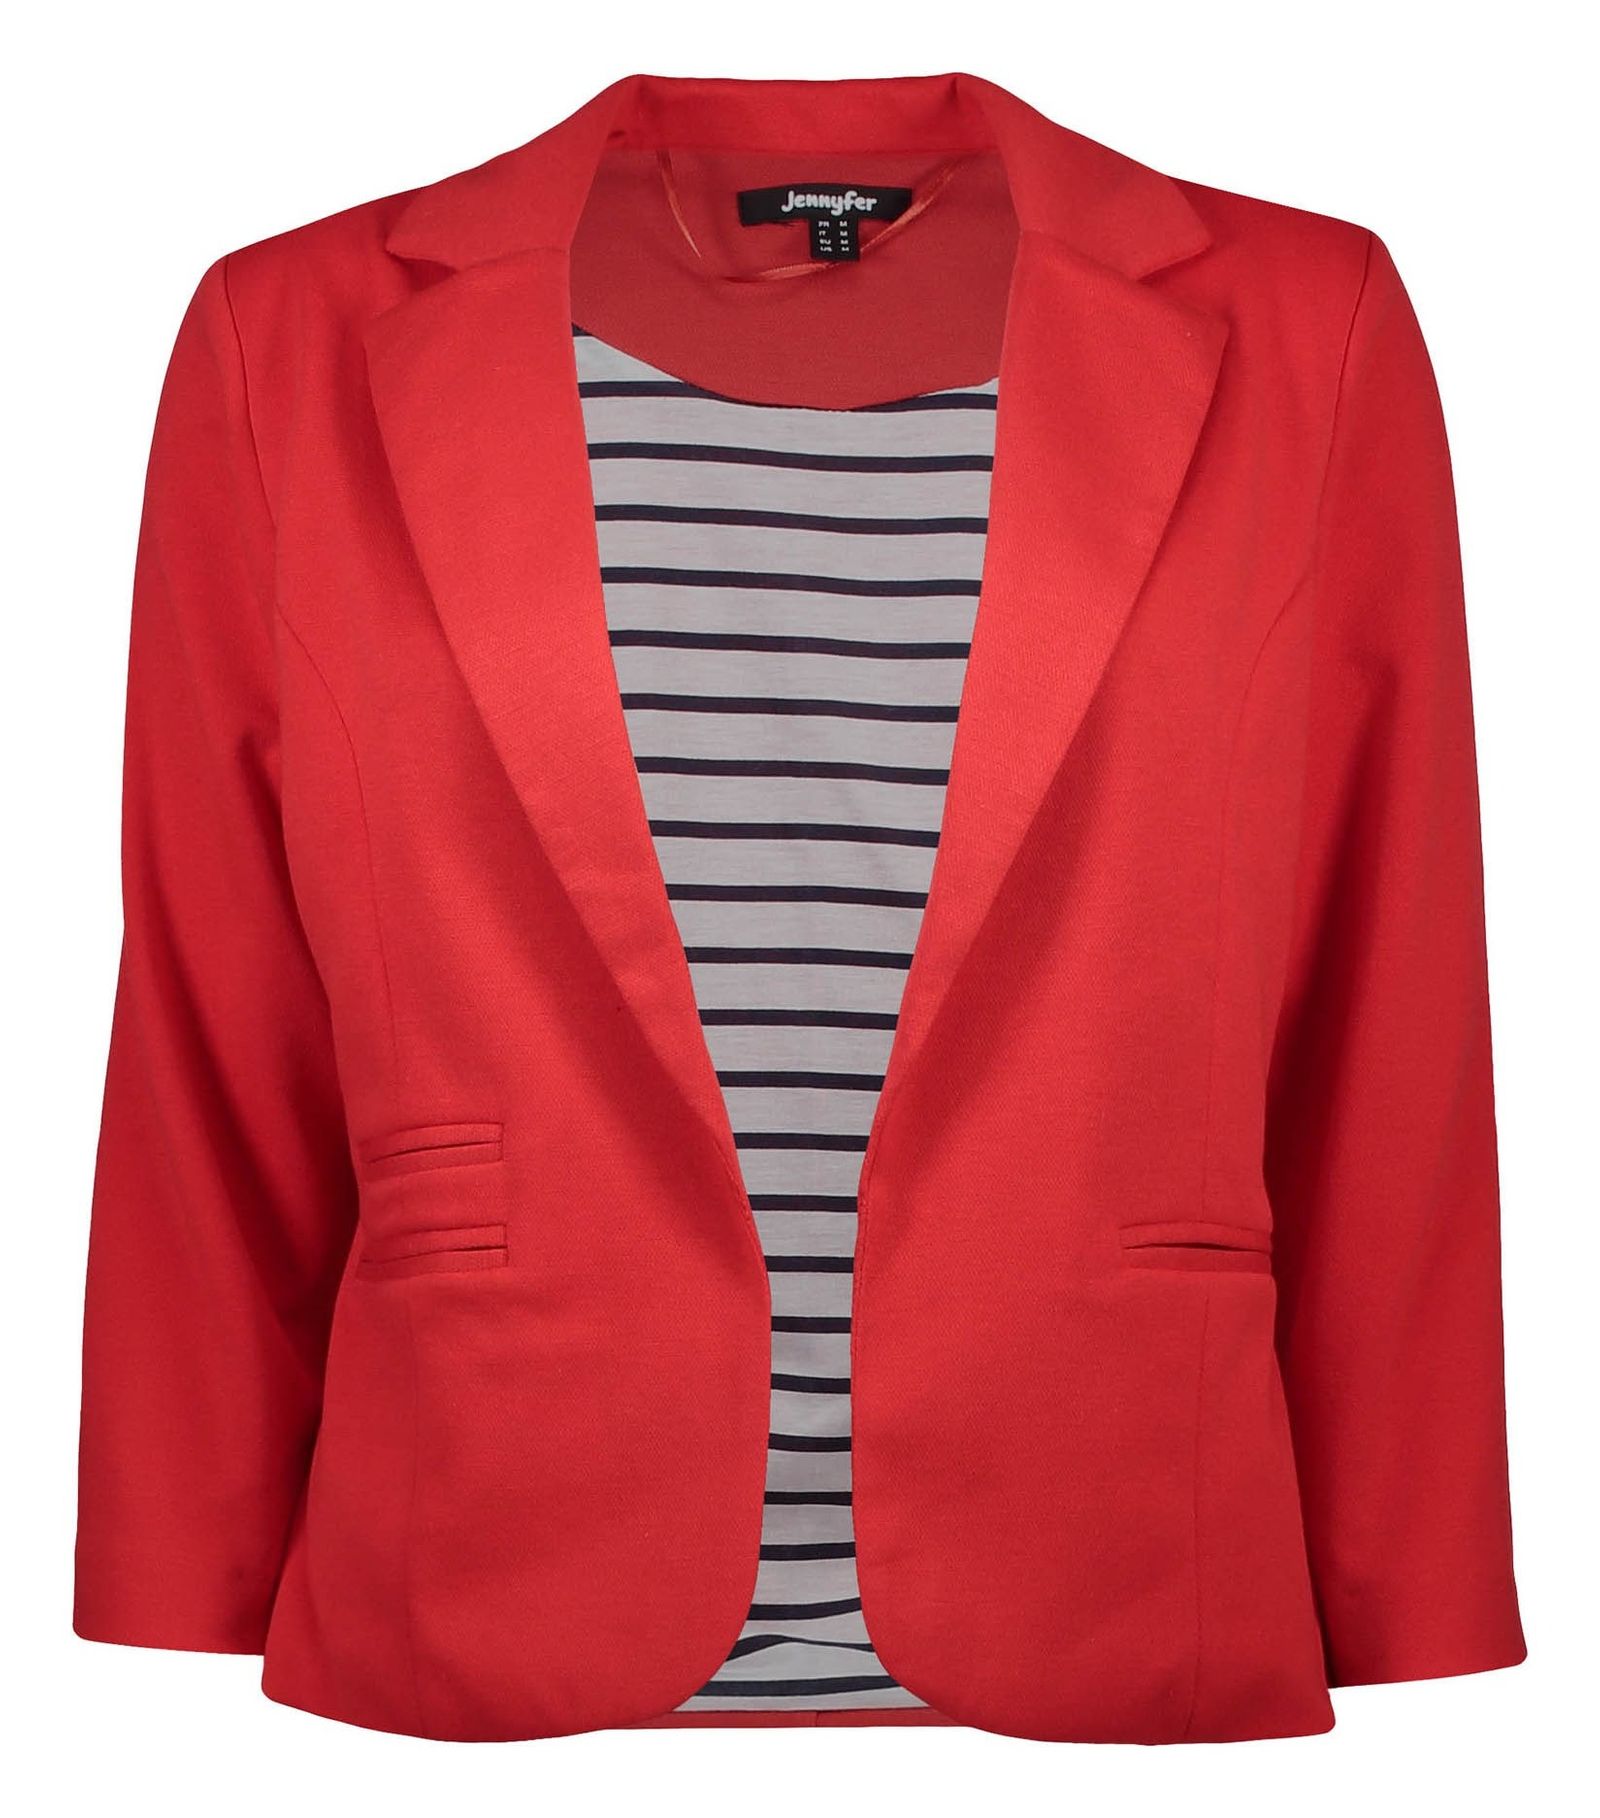 کت کوتاه زنانه - جنیفر - قرمز - 1